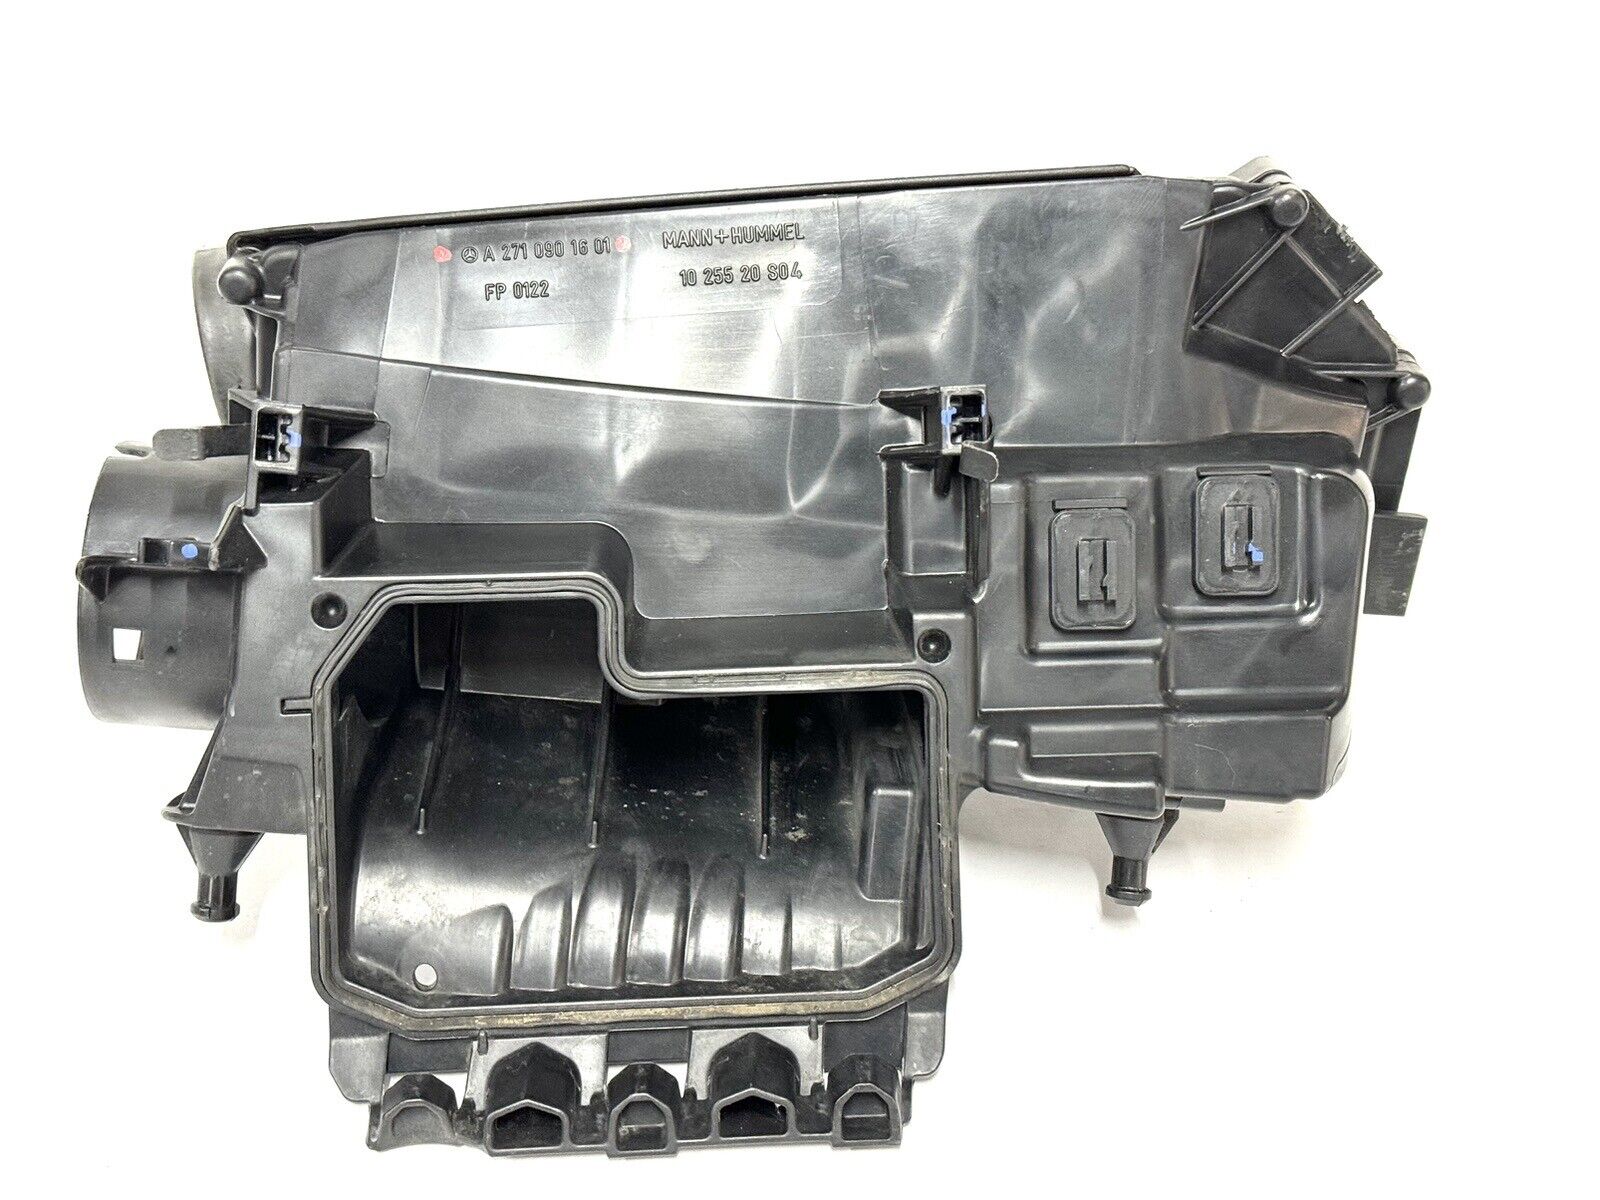 W204 Mercedes 2012 C250 Air Intake Cleaner Filter Housing Box 2710940304 OEM